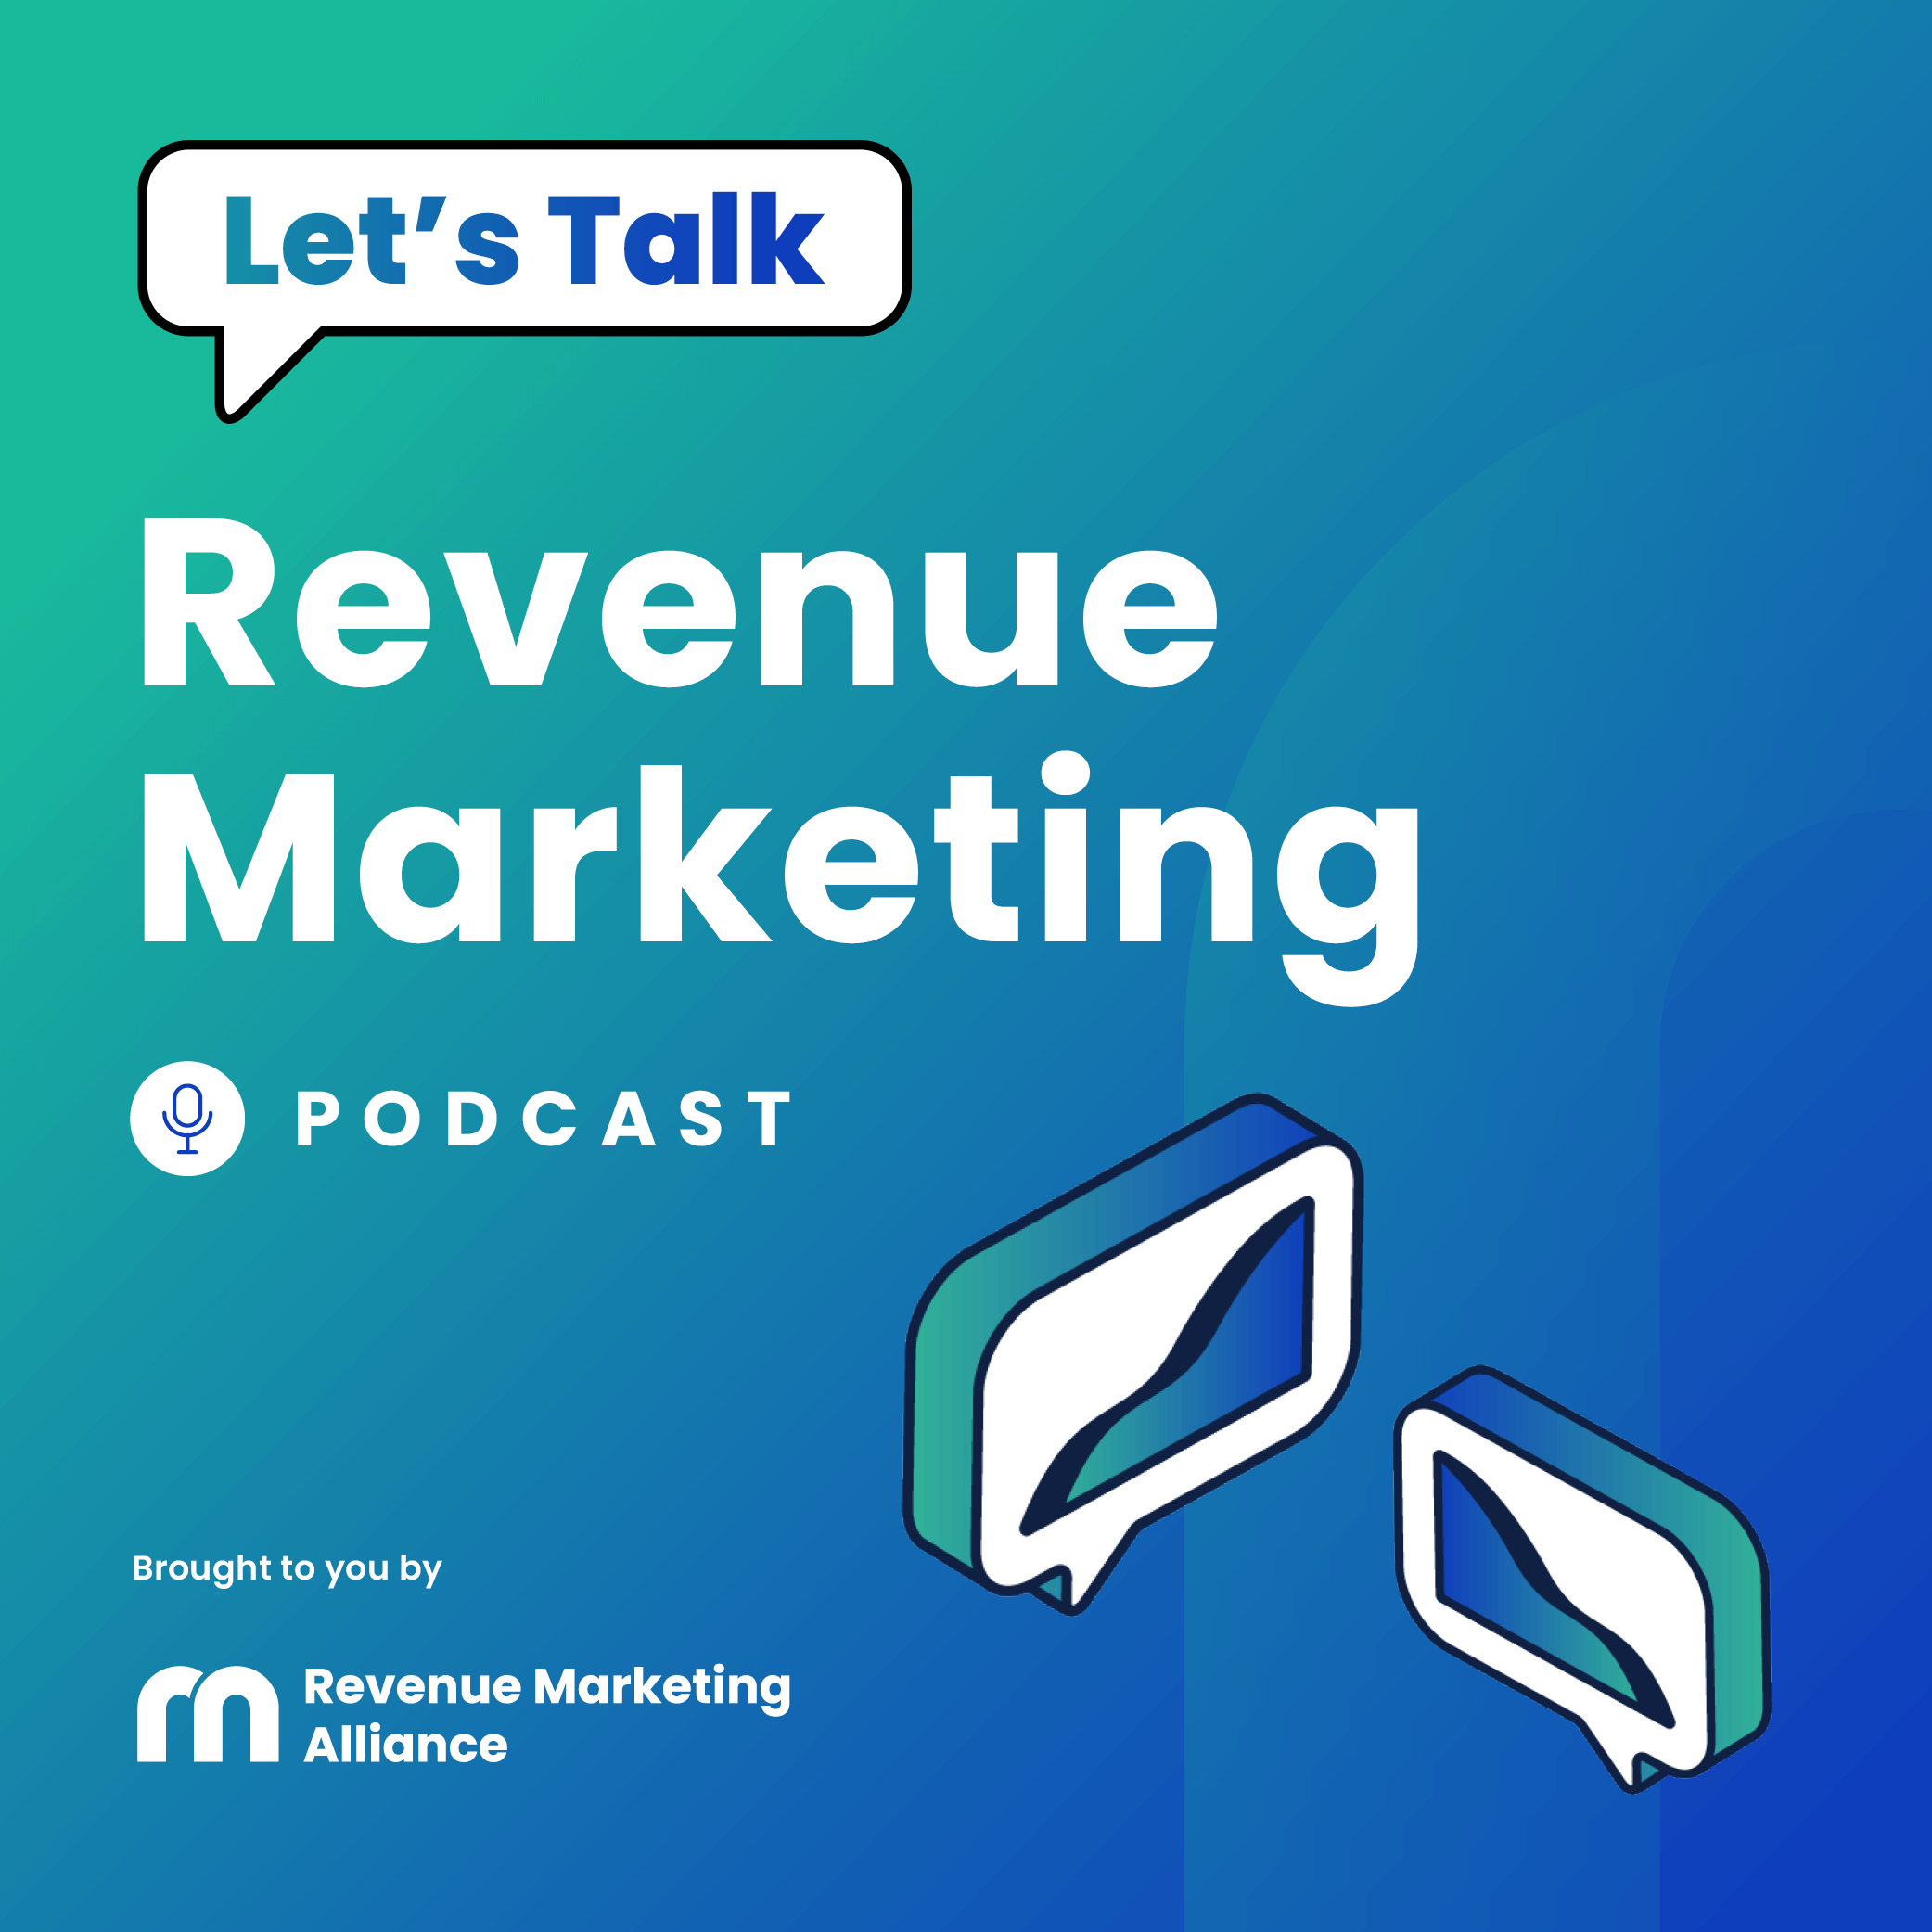 Let's Talk Revenue Marketing